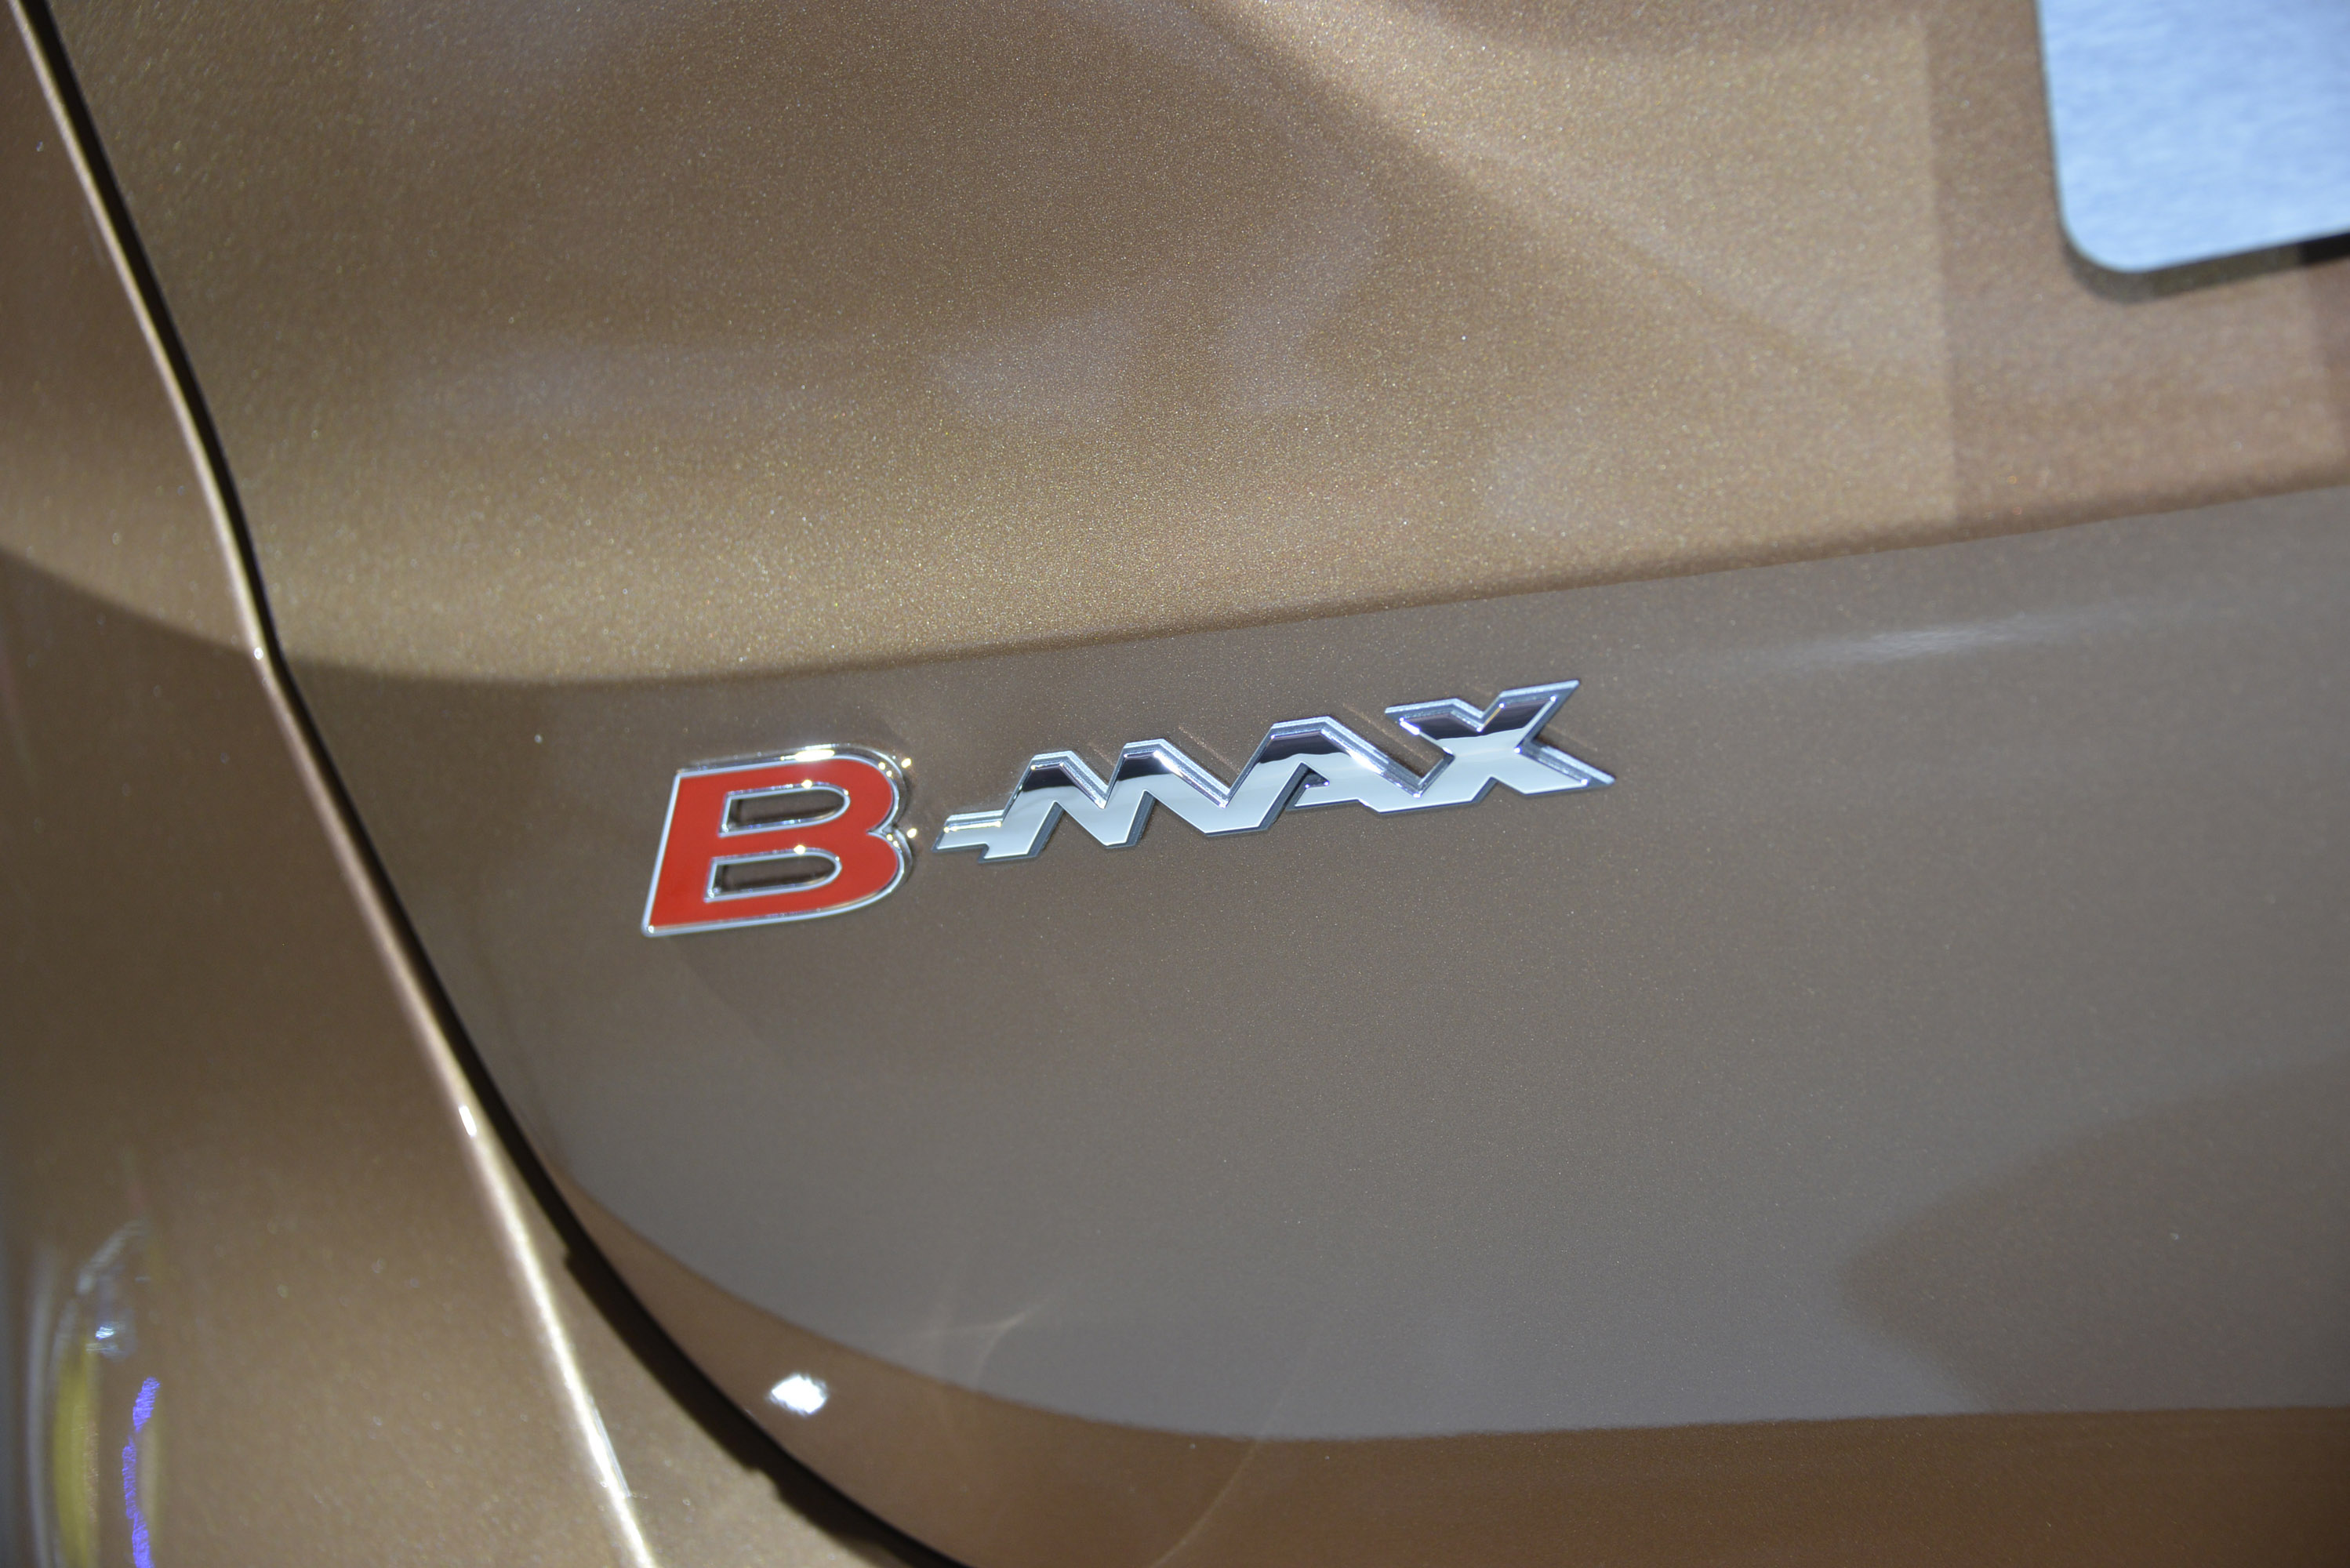 Ford B-MAX Paris